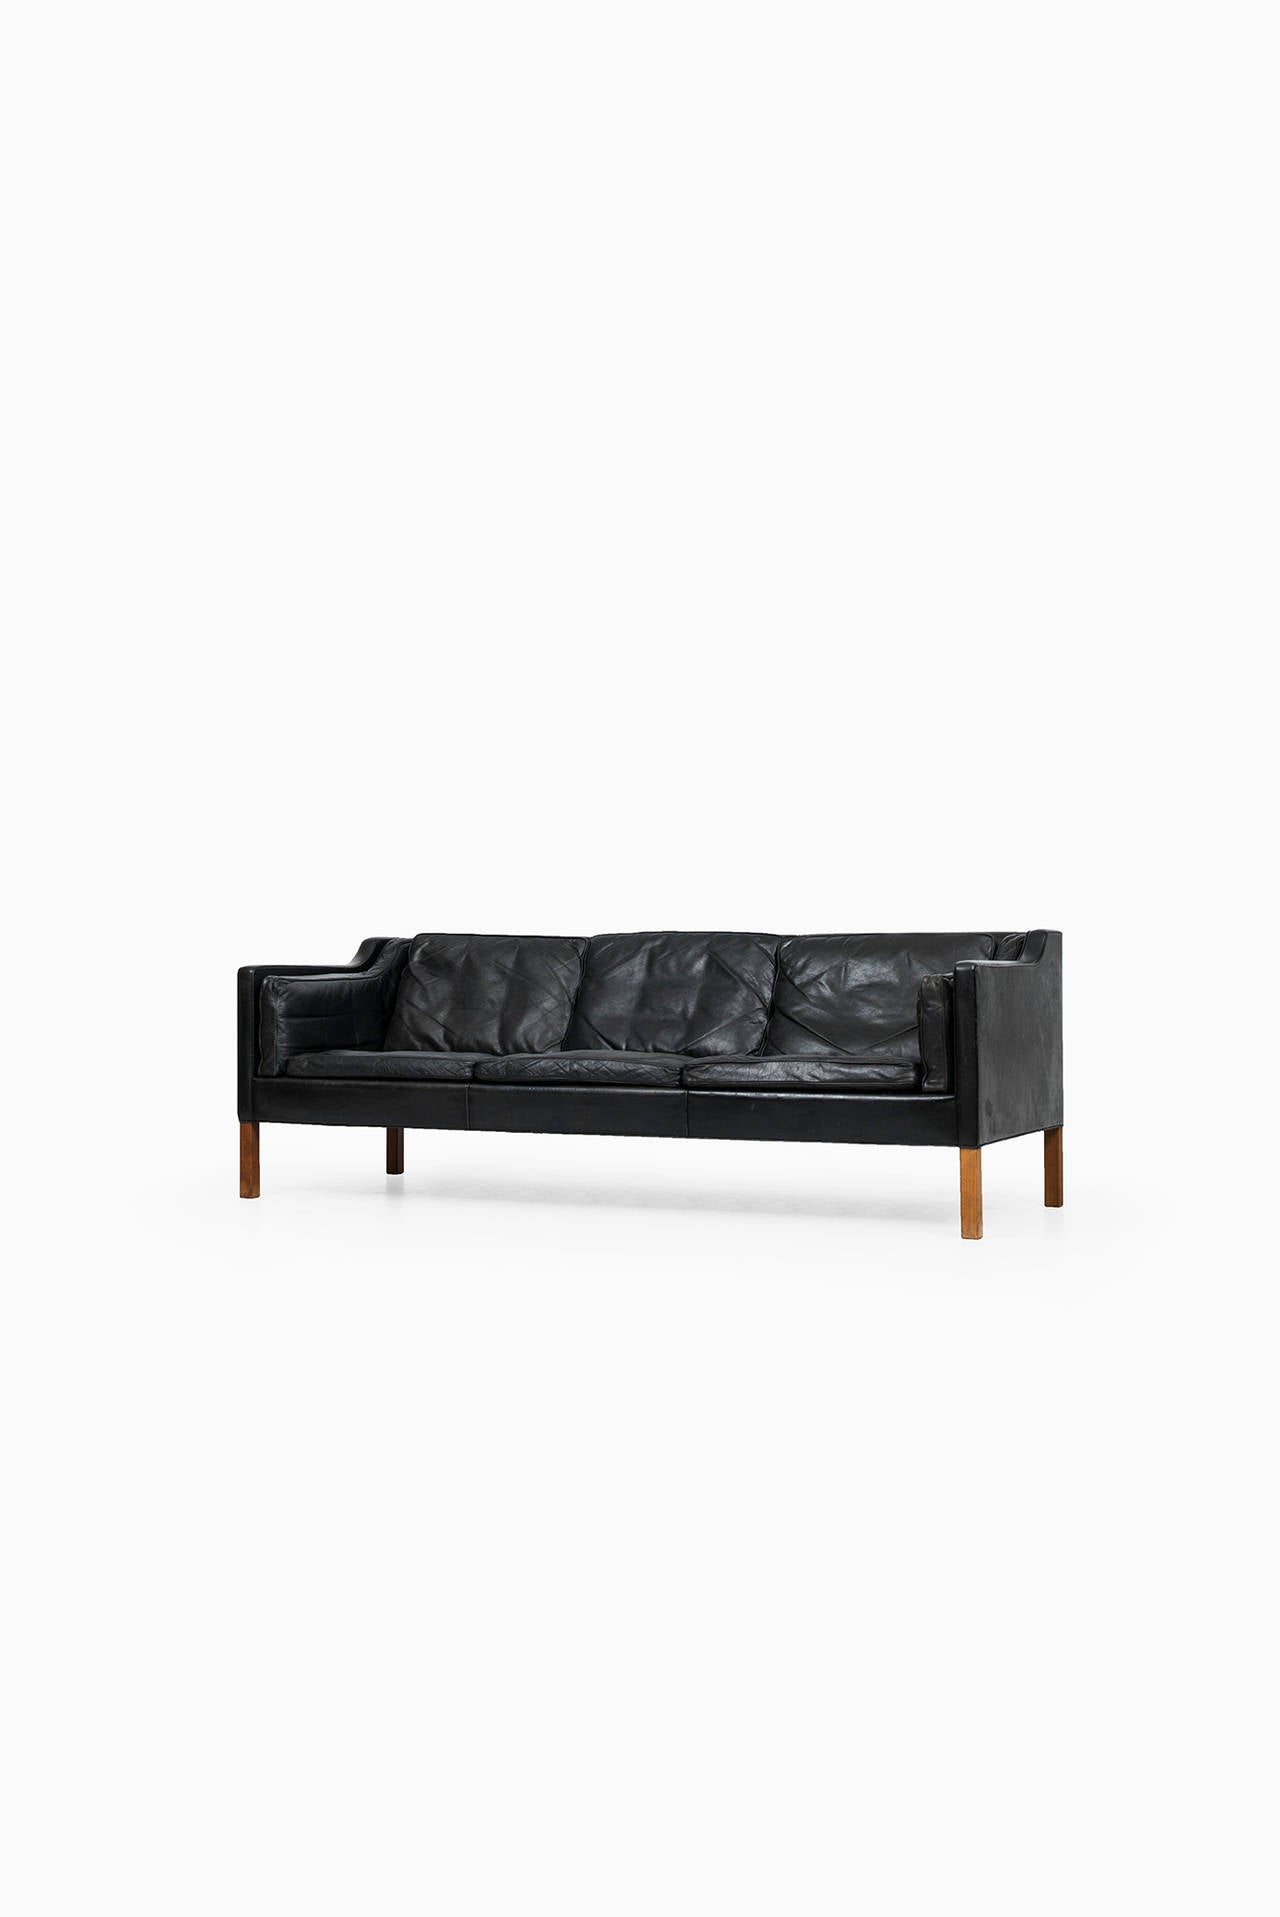 Danish Børge Mogensen 2213 Leather Sofa by Fredericia Stolefabrik in Denmark